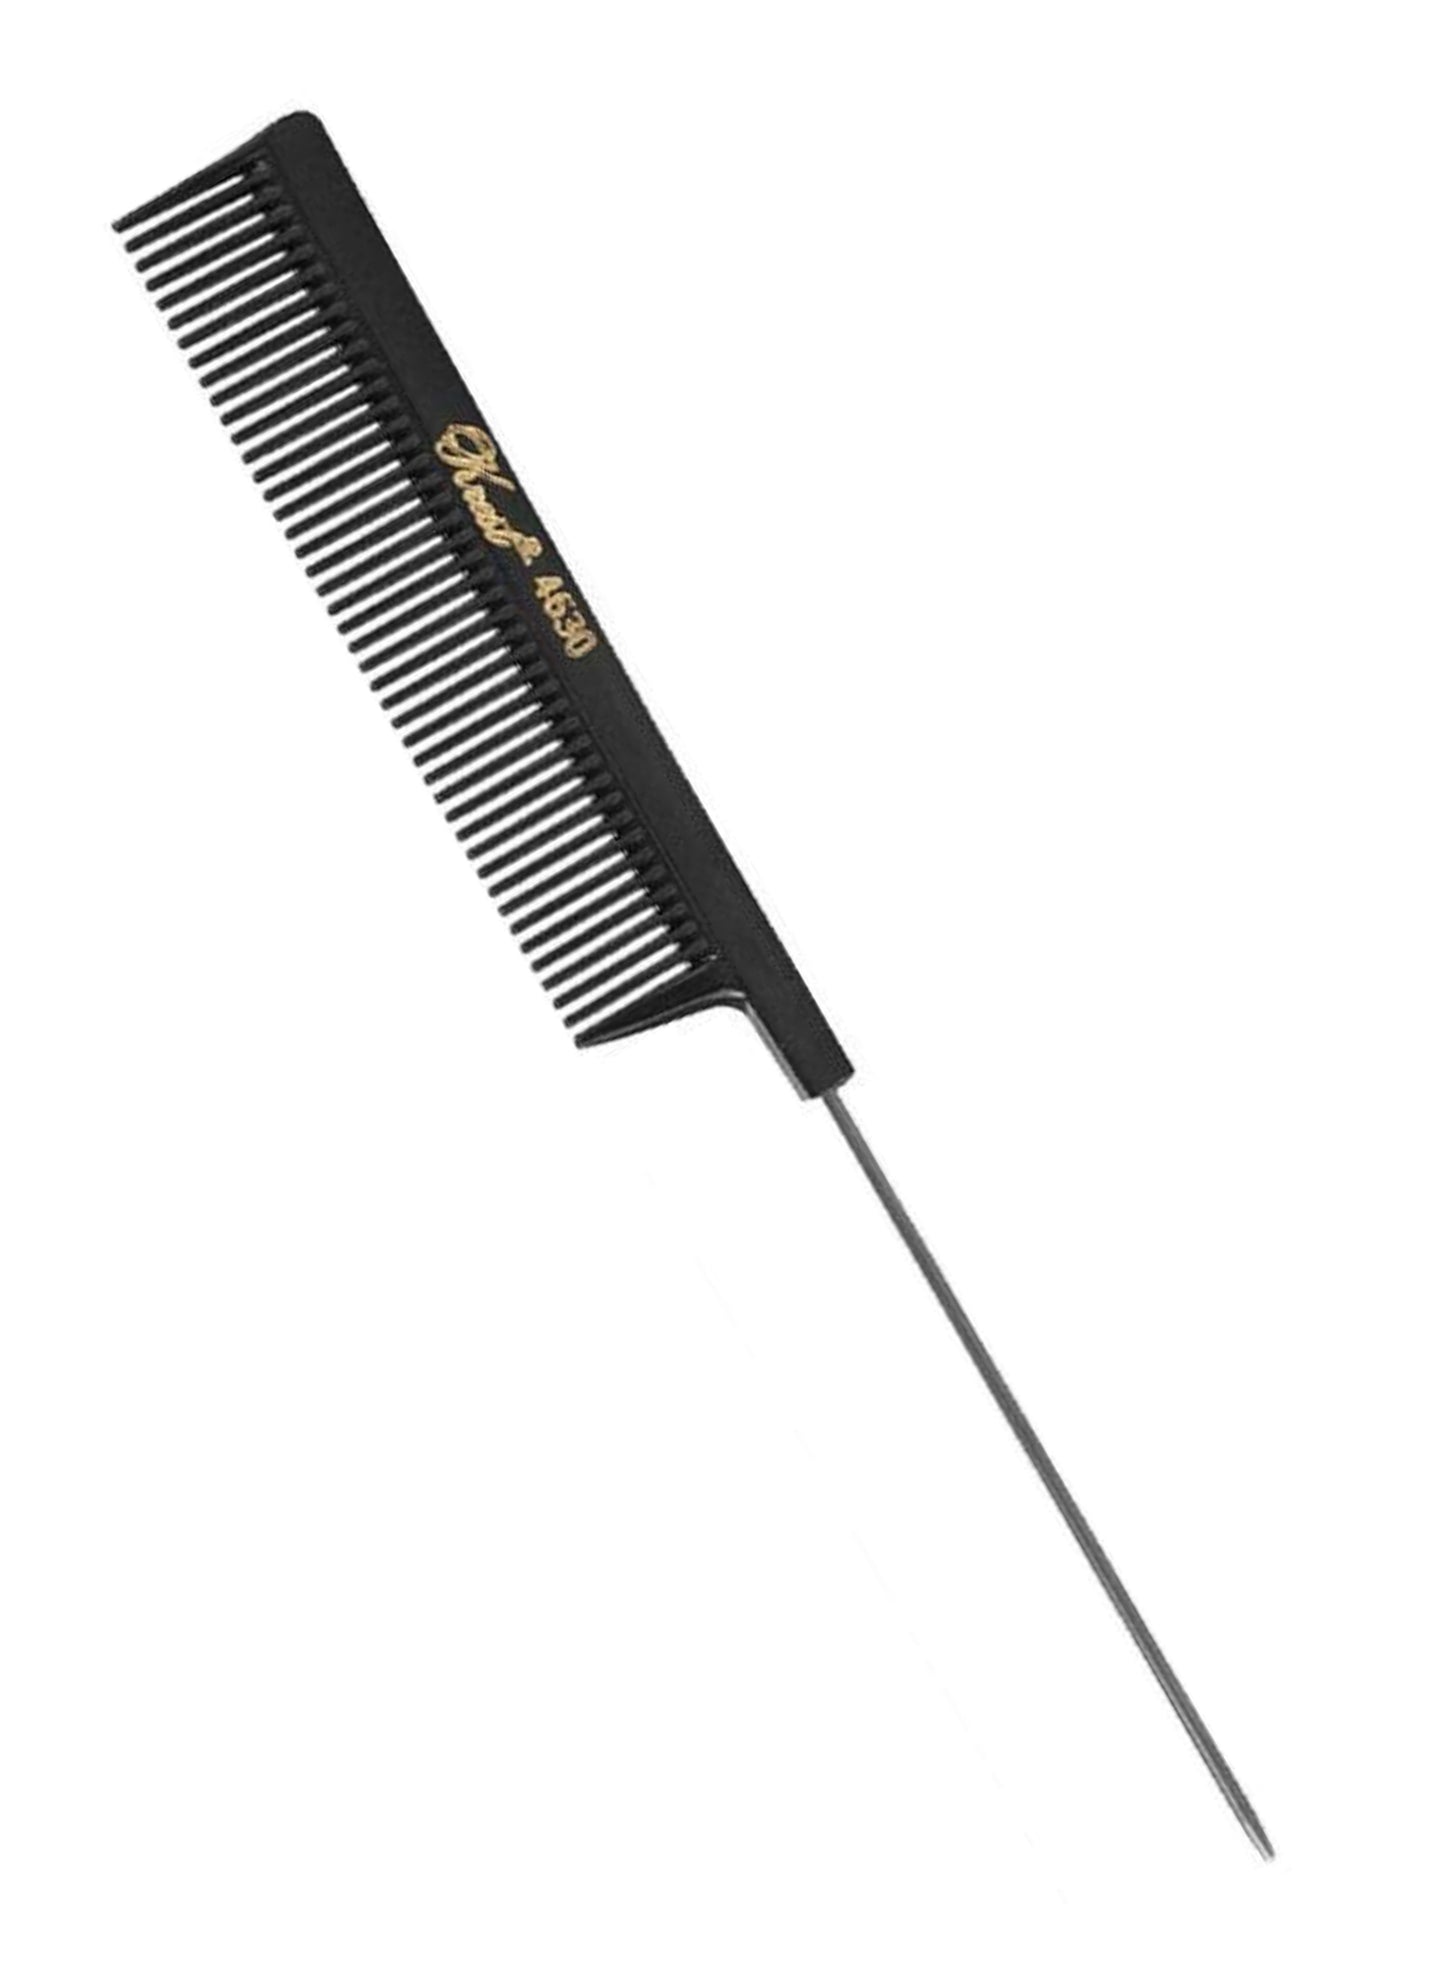 Krest Comb Pintail Comb Weaving Comb Foiling Comb Coarse Steel Pin Rattail Hair Comb. Black